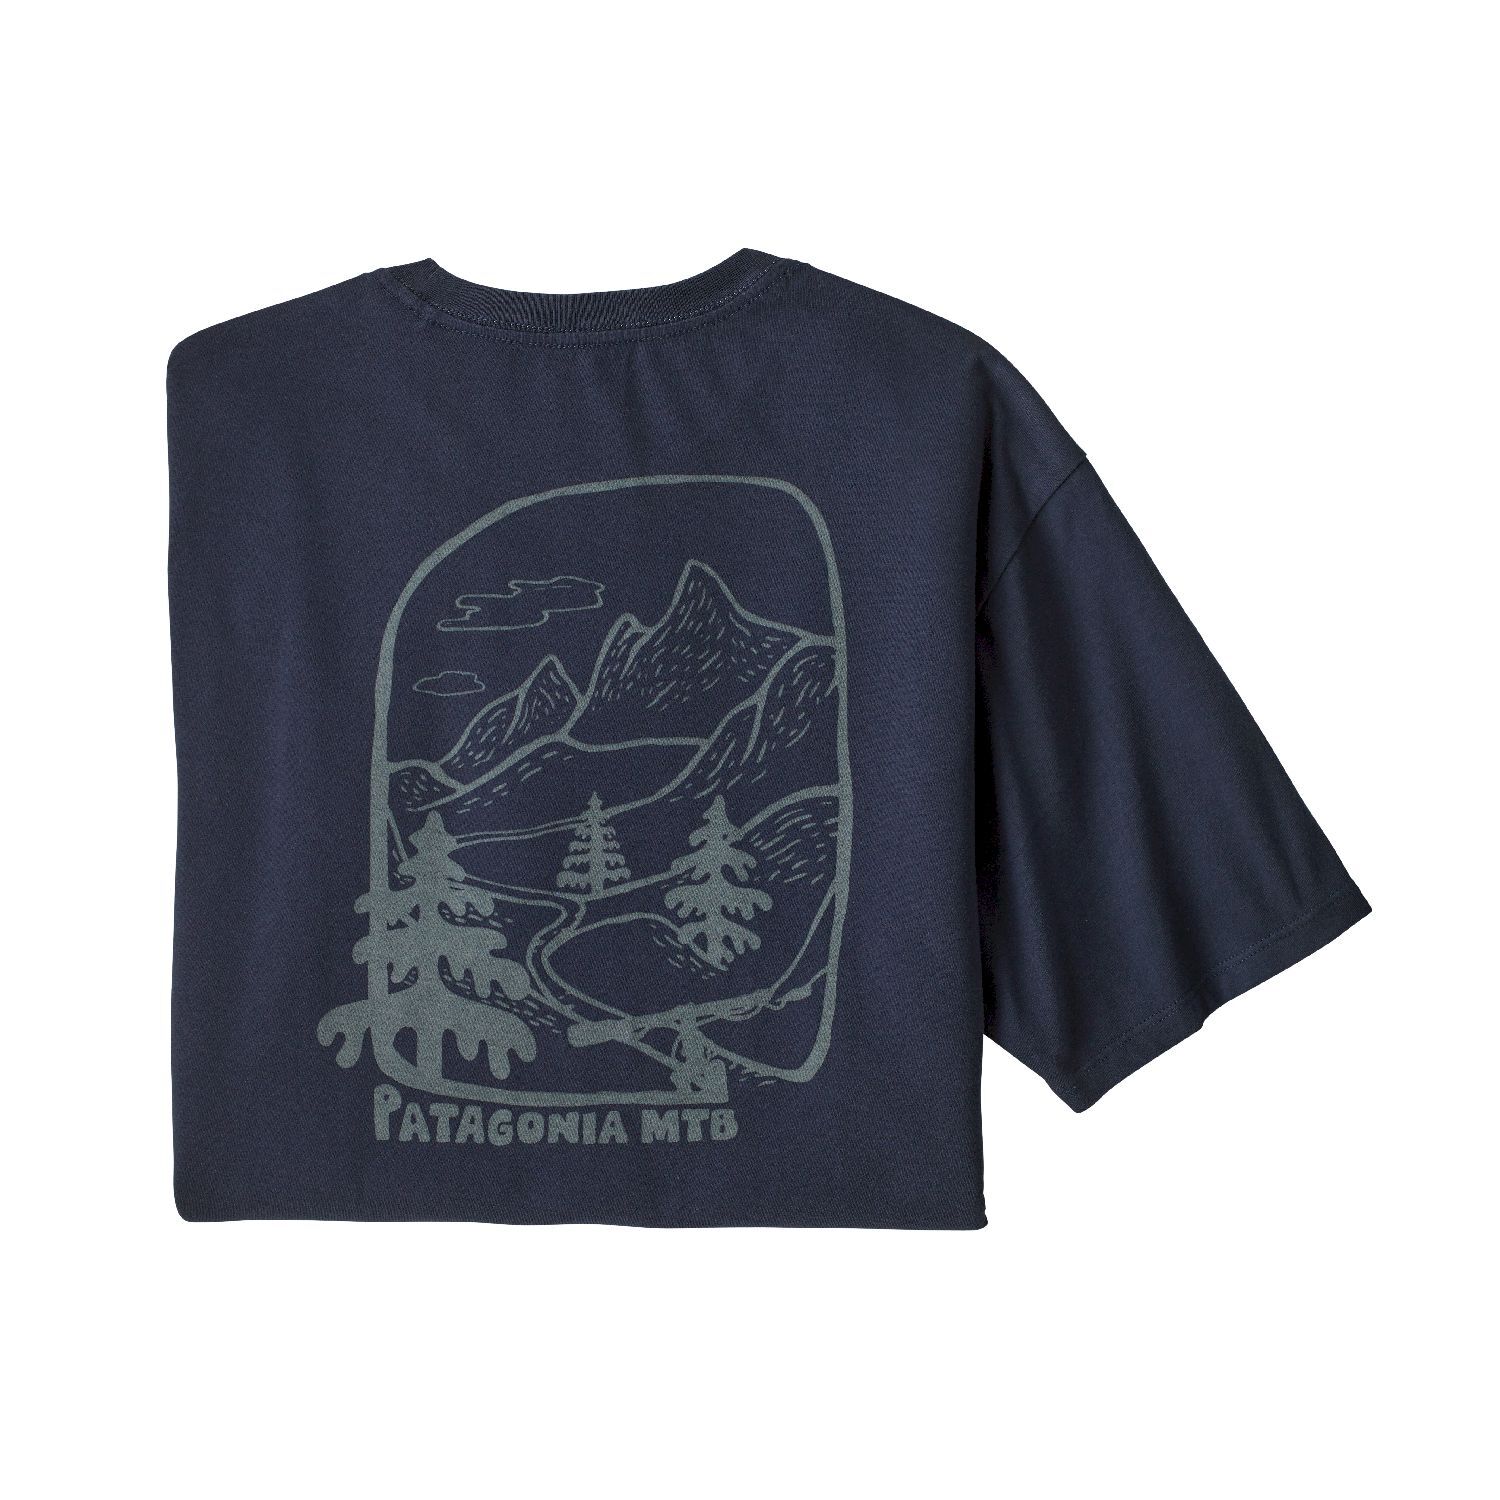 Patagonia Roam the Dirt Organic - Camiseta - Hombre